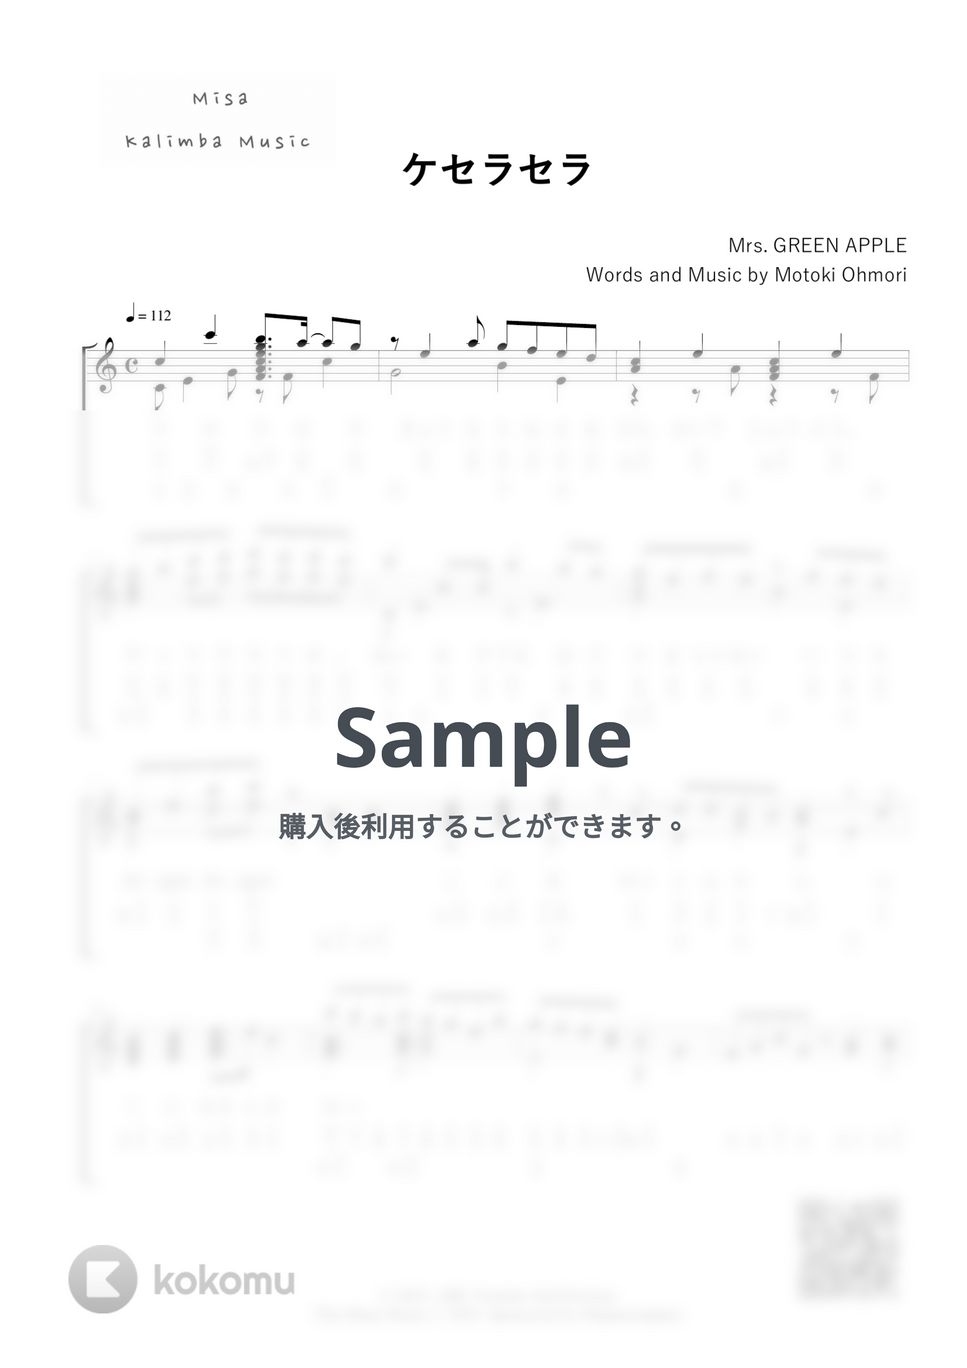 Mrs. GREEN APPLE - ケセラセラ / 17音カリンバ / 数字音名表記 (歌詞付き/ 模範演奏付き) by Misa / Kalimba Music